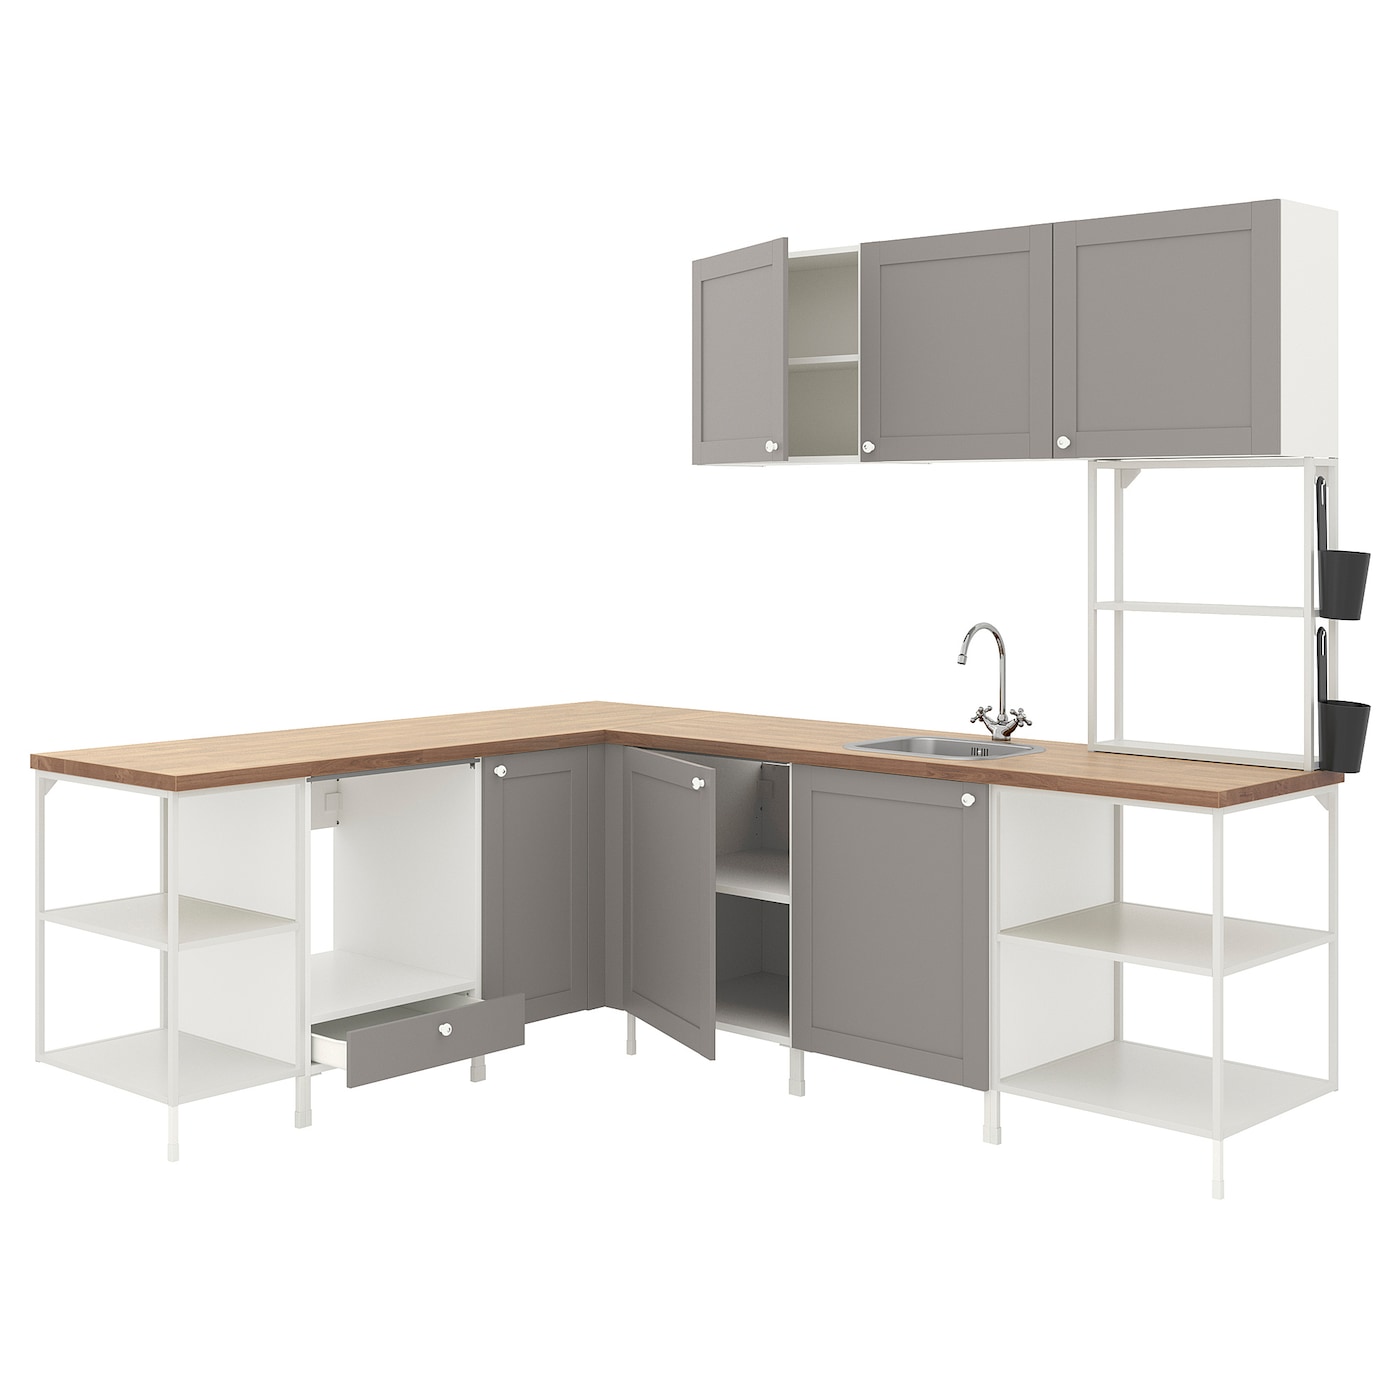 Угловая кухонная комбинация для хранения - ENHET  IKEA/ ЭНХЕТ ИКЕА, 210,5х248,5х75 см, белый/серый/бежевый